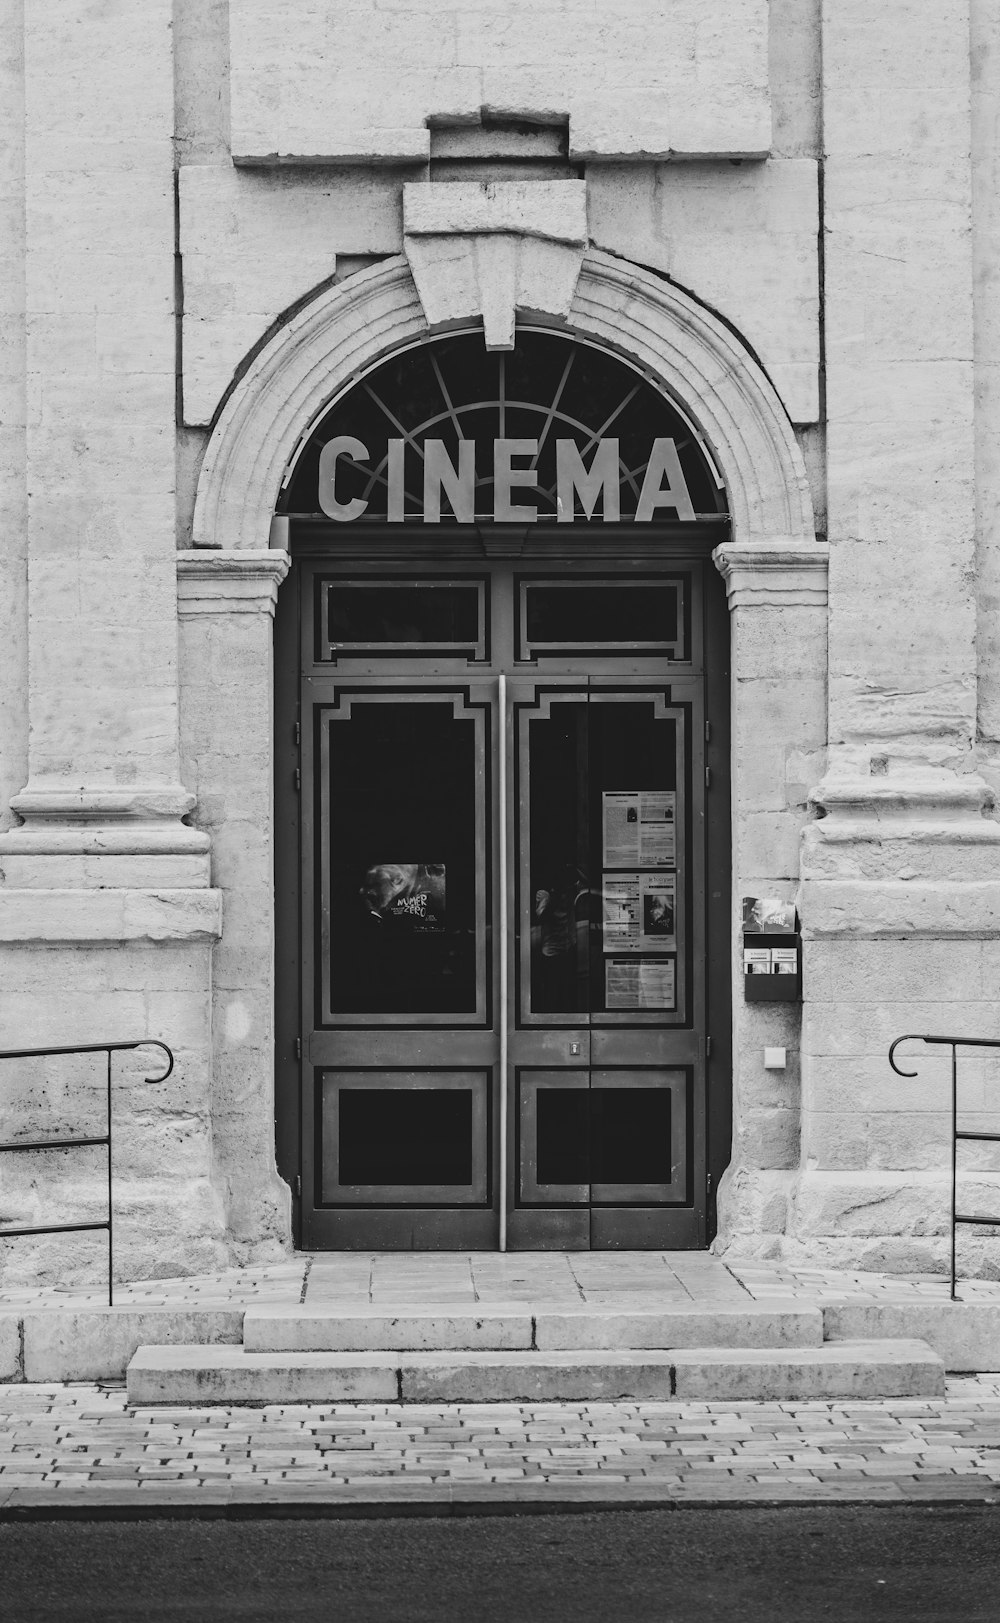 a black and white photo of a cinema entrance